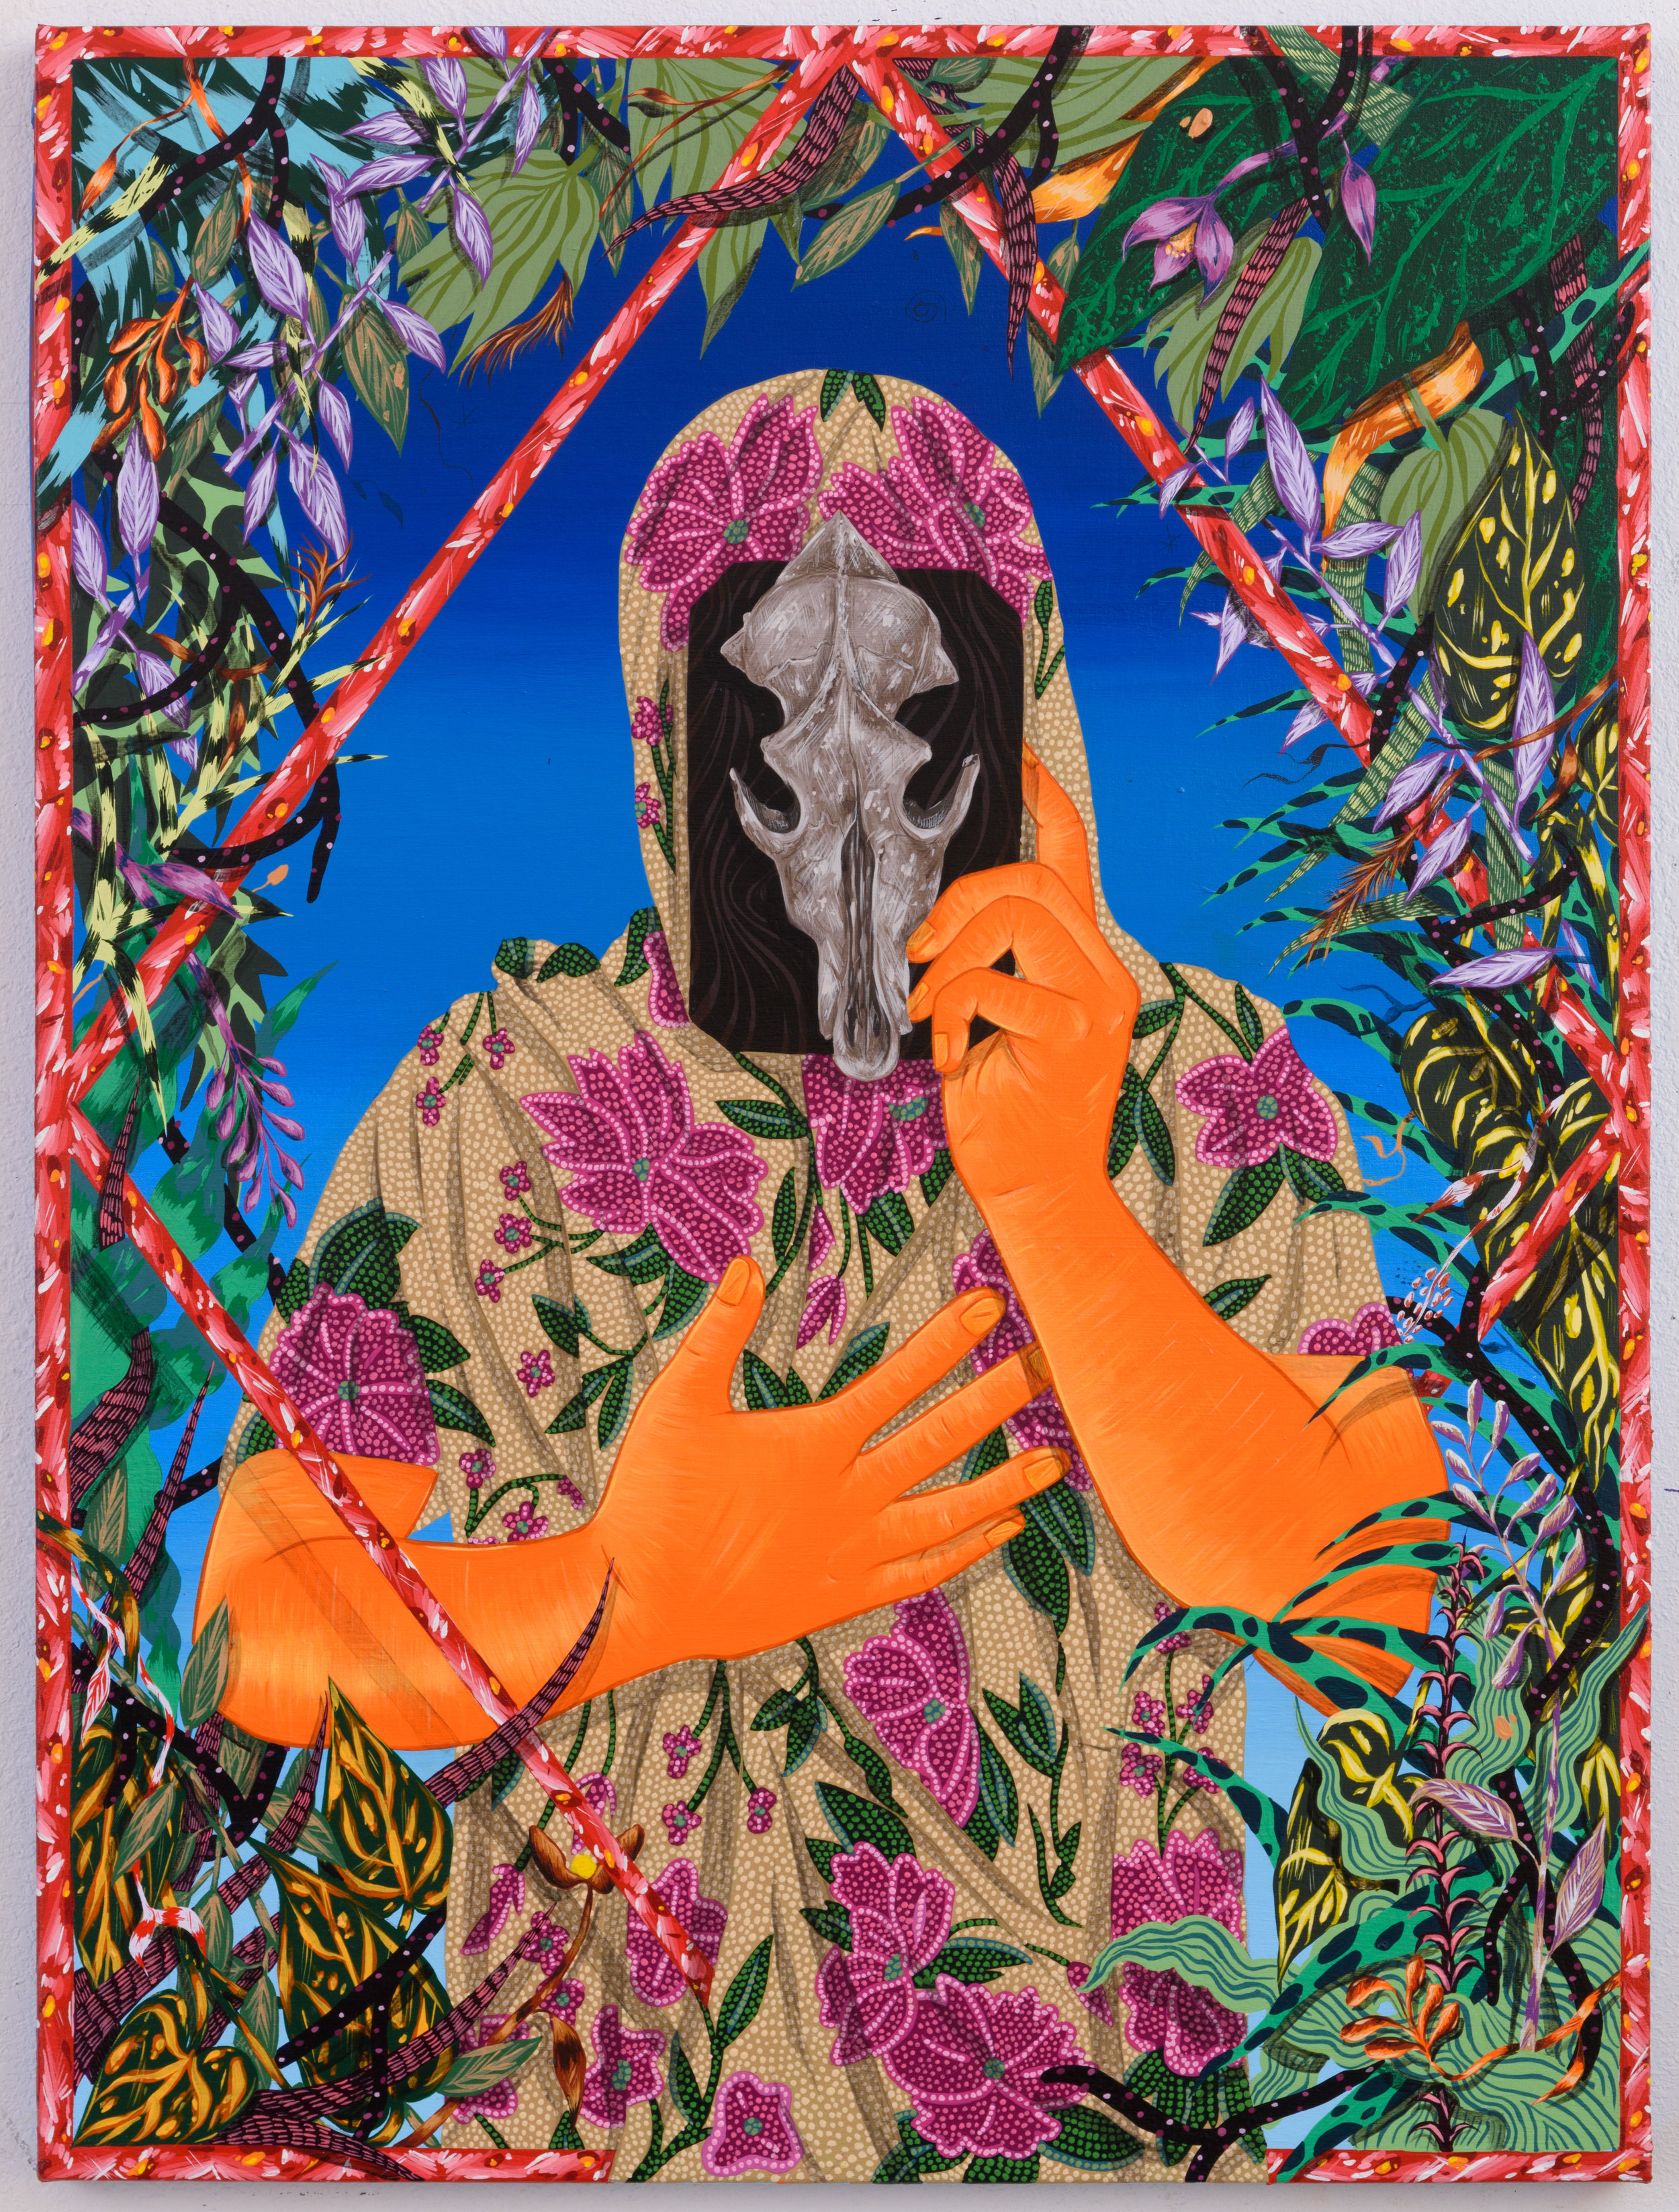 Amir H. Fallah. “Veneer”&nbsp;(2017). Acrylic on canvas. 30 x 40 INCHES. Courtesy of the Artist and Shulamit Nazarian, Los Angeles.